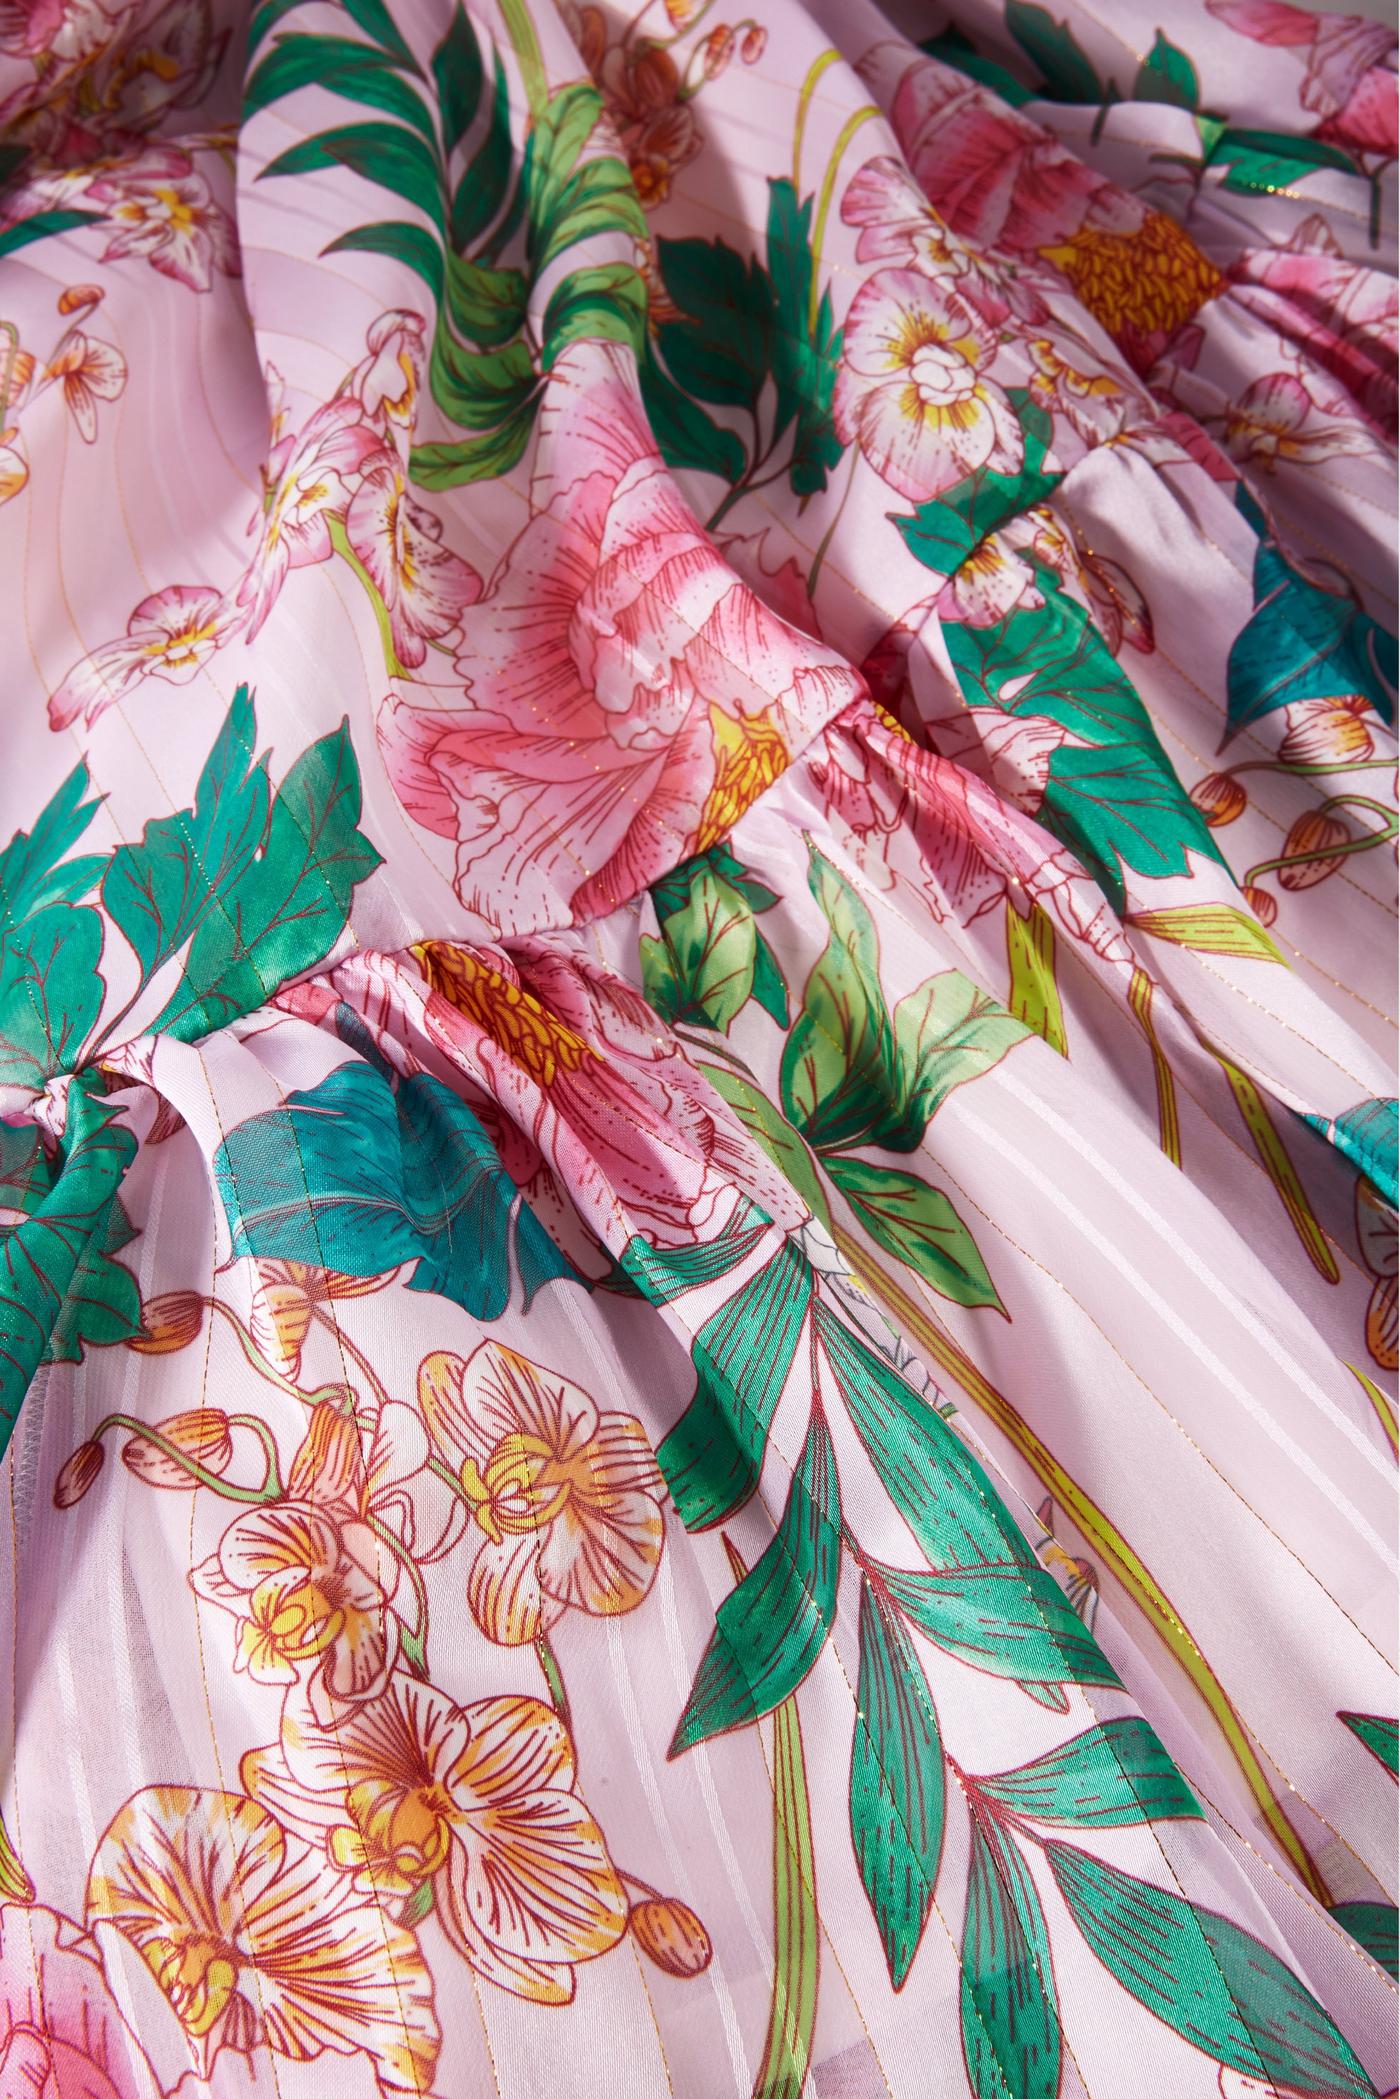 Boston Proper - Peony Pink - Floral Embellished Wrap Maxi Dress - Xs